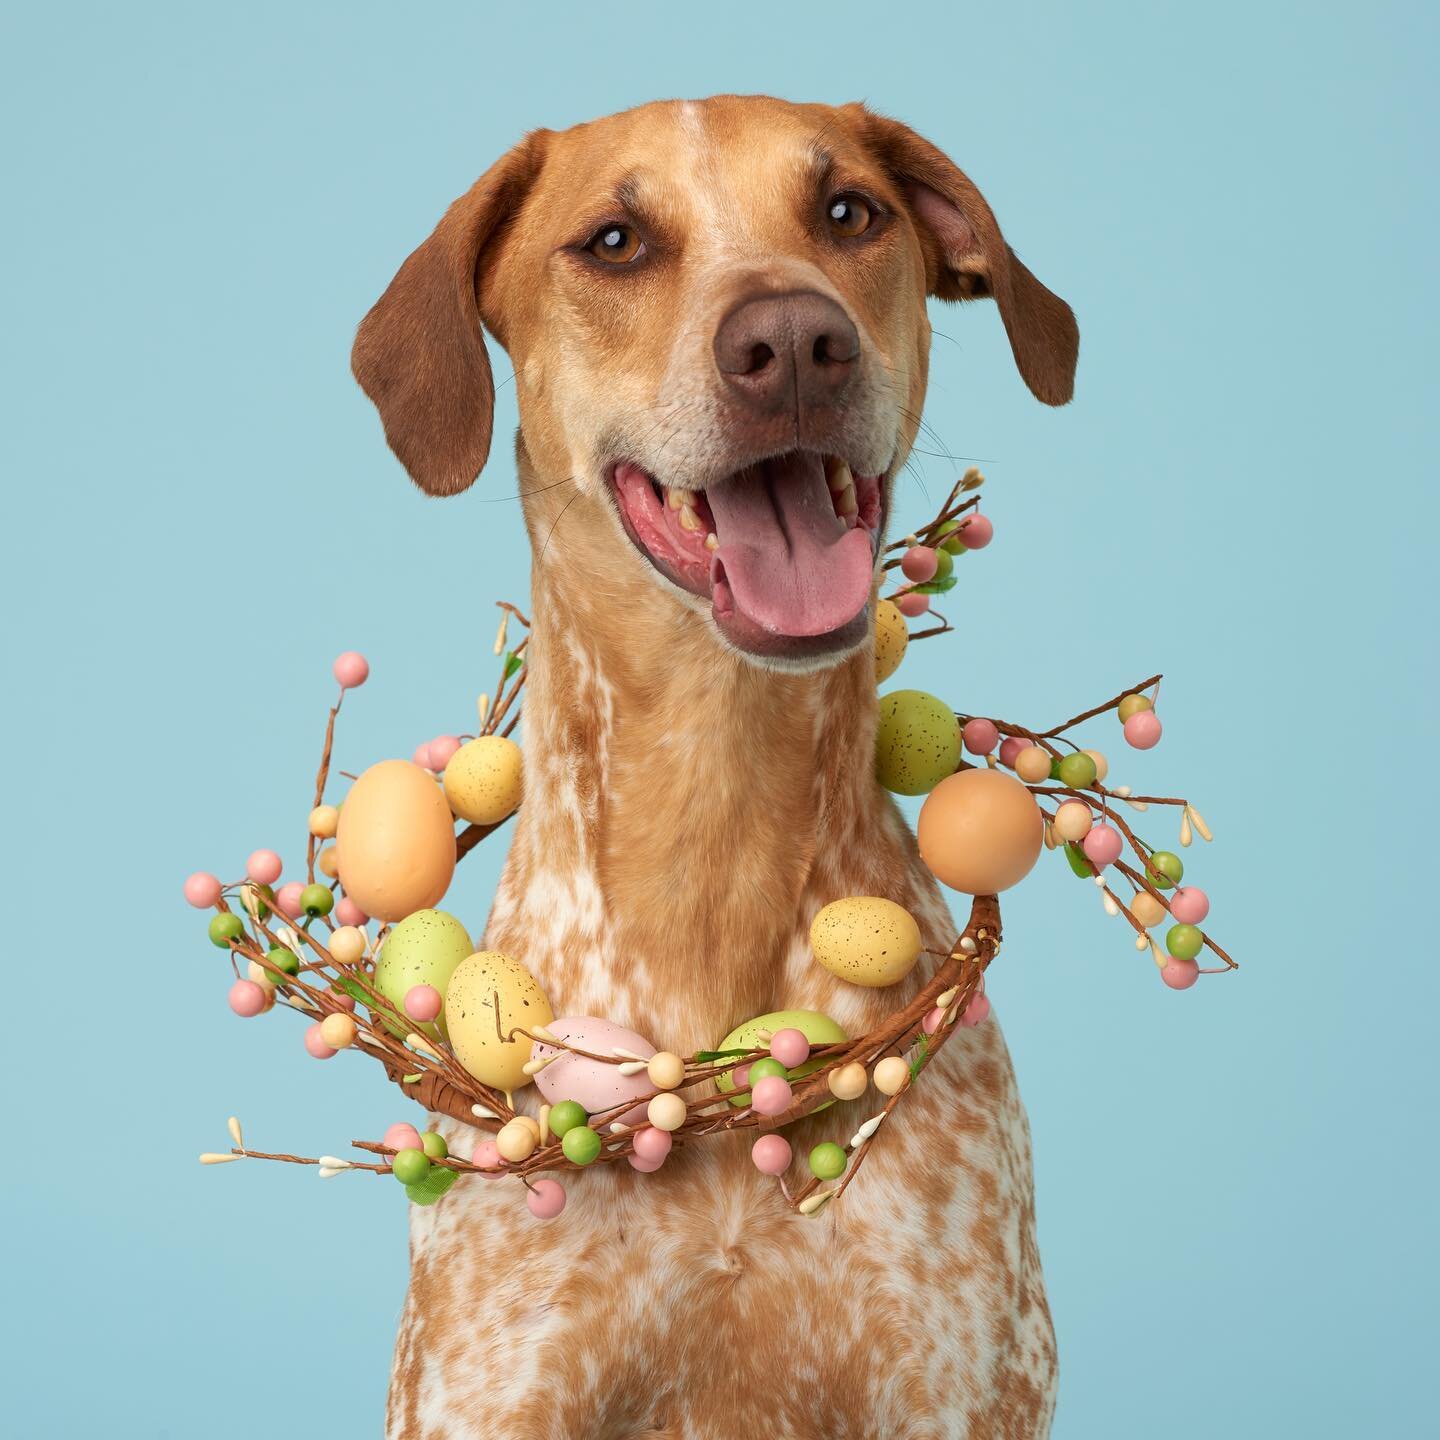 Wishing everyone an egg-cellent day! 🐣
Hoppy Easter! 🐰

#happyeaster #donteatchocolatepuppers #choosecarrotsnotchocolate #dogstudioportrait #nikon #broncolor